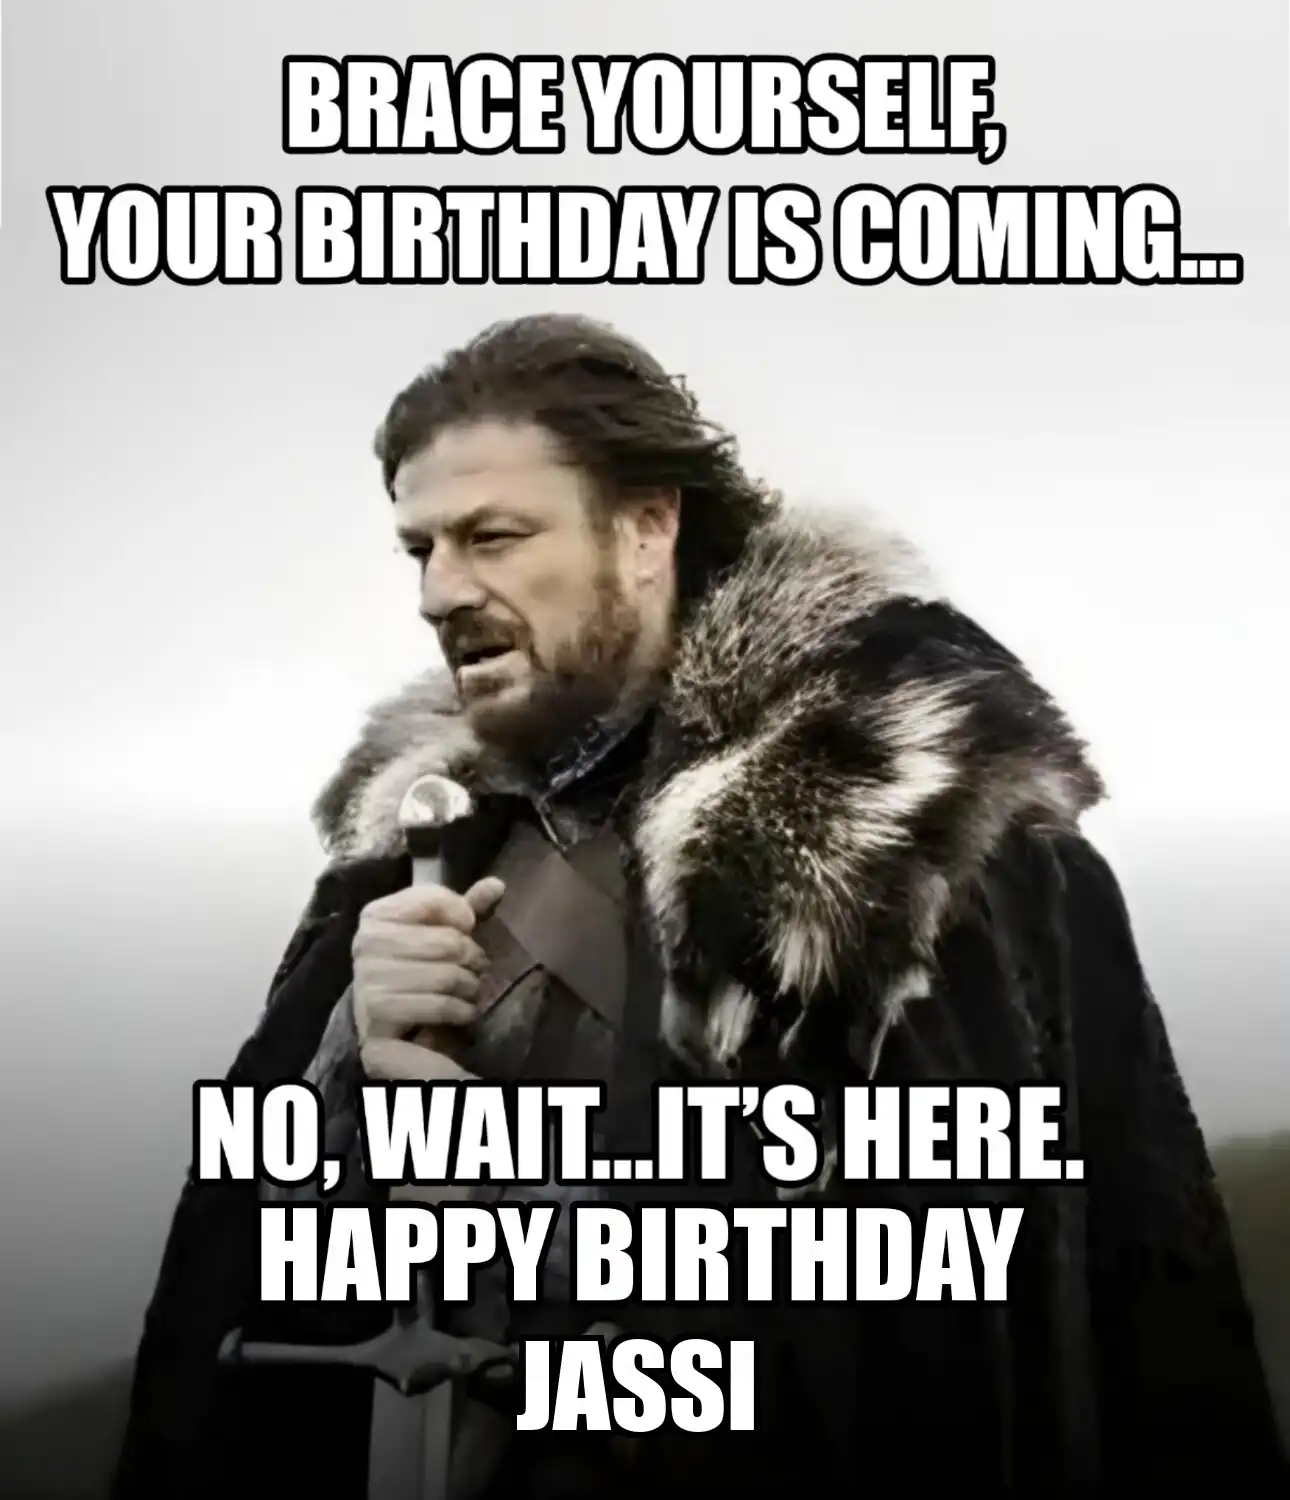 Happy Birthday Jassi Brace Yourself Your Birthday Is Coming Meme